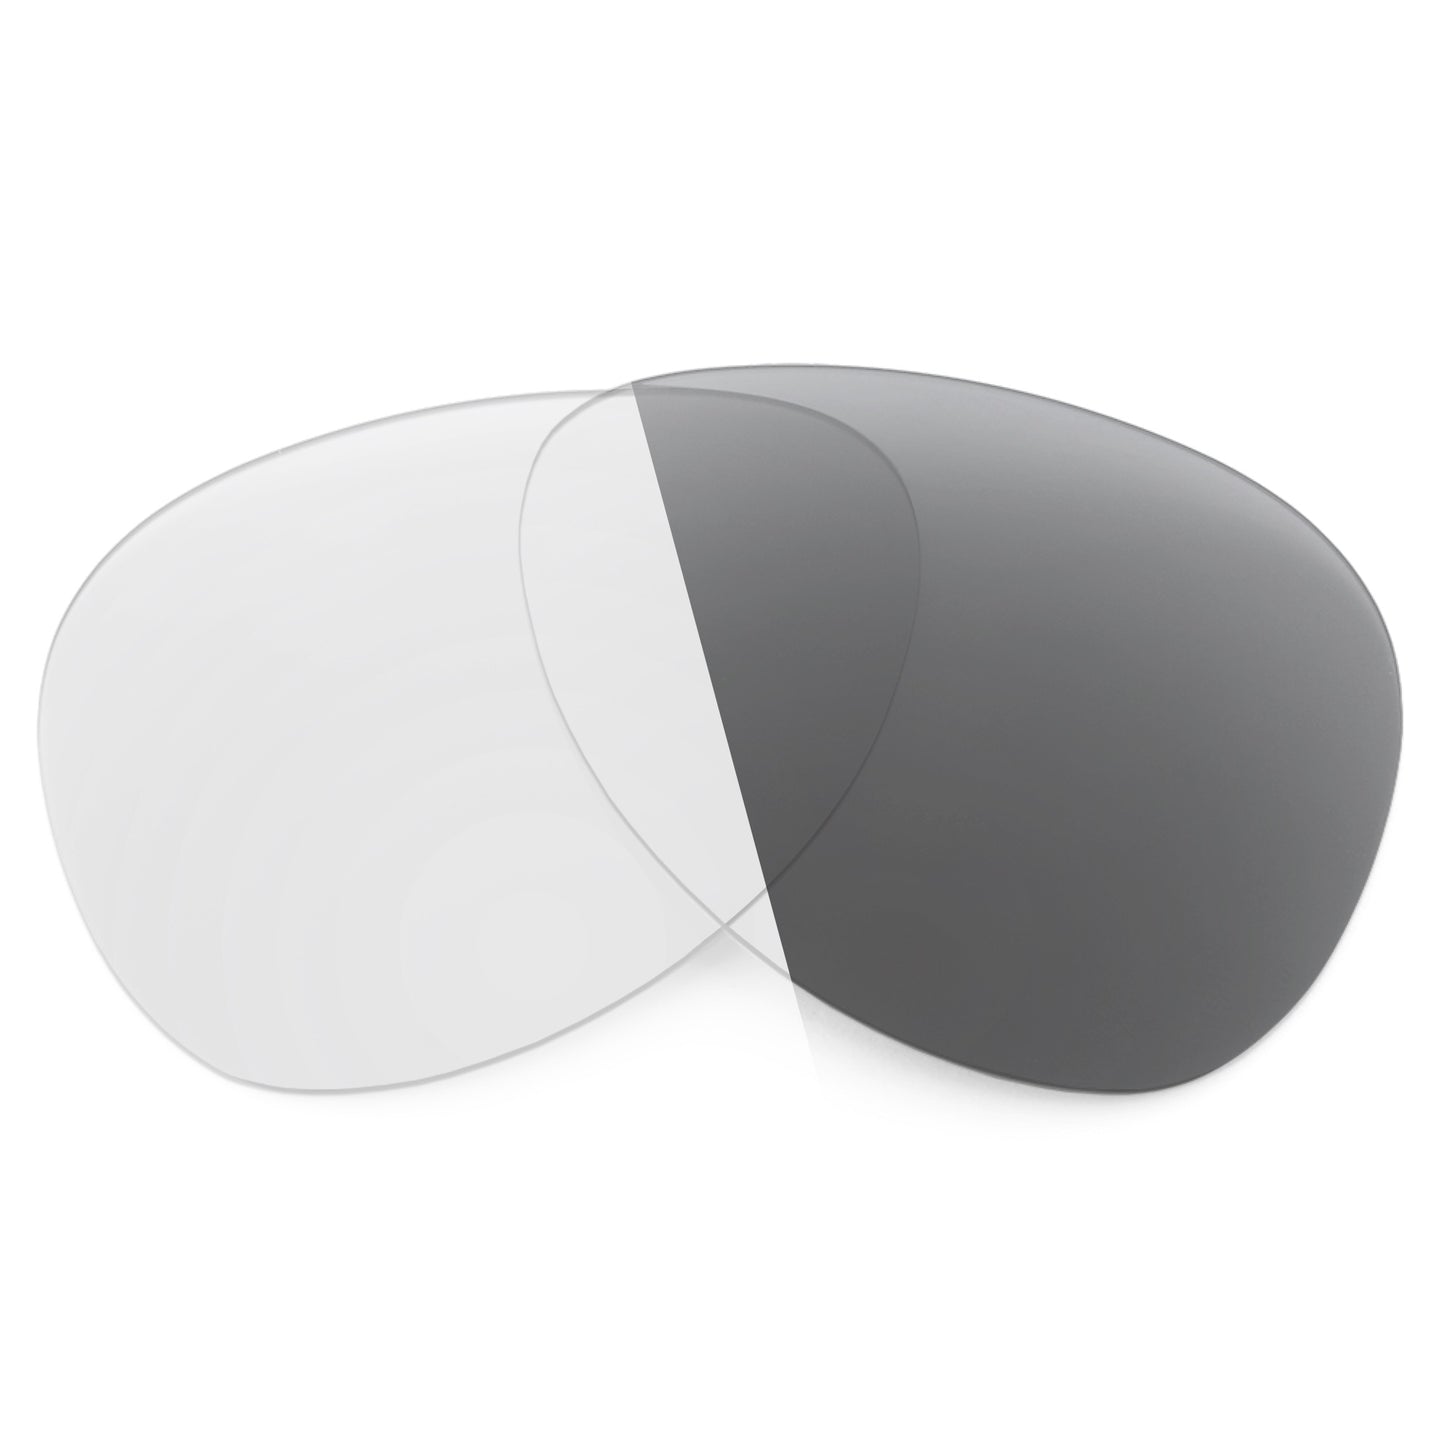 Revant replacement lenses for Dragon Passport Non-Polarized Adapt Gray Photochromic